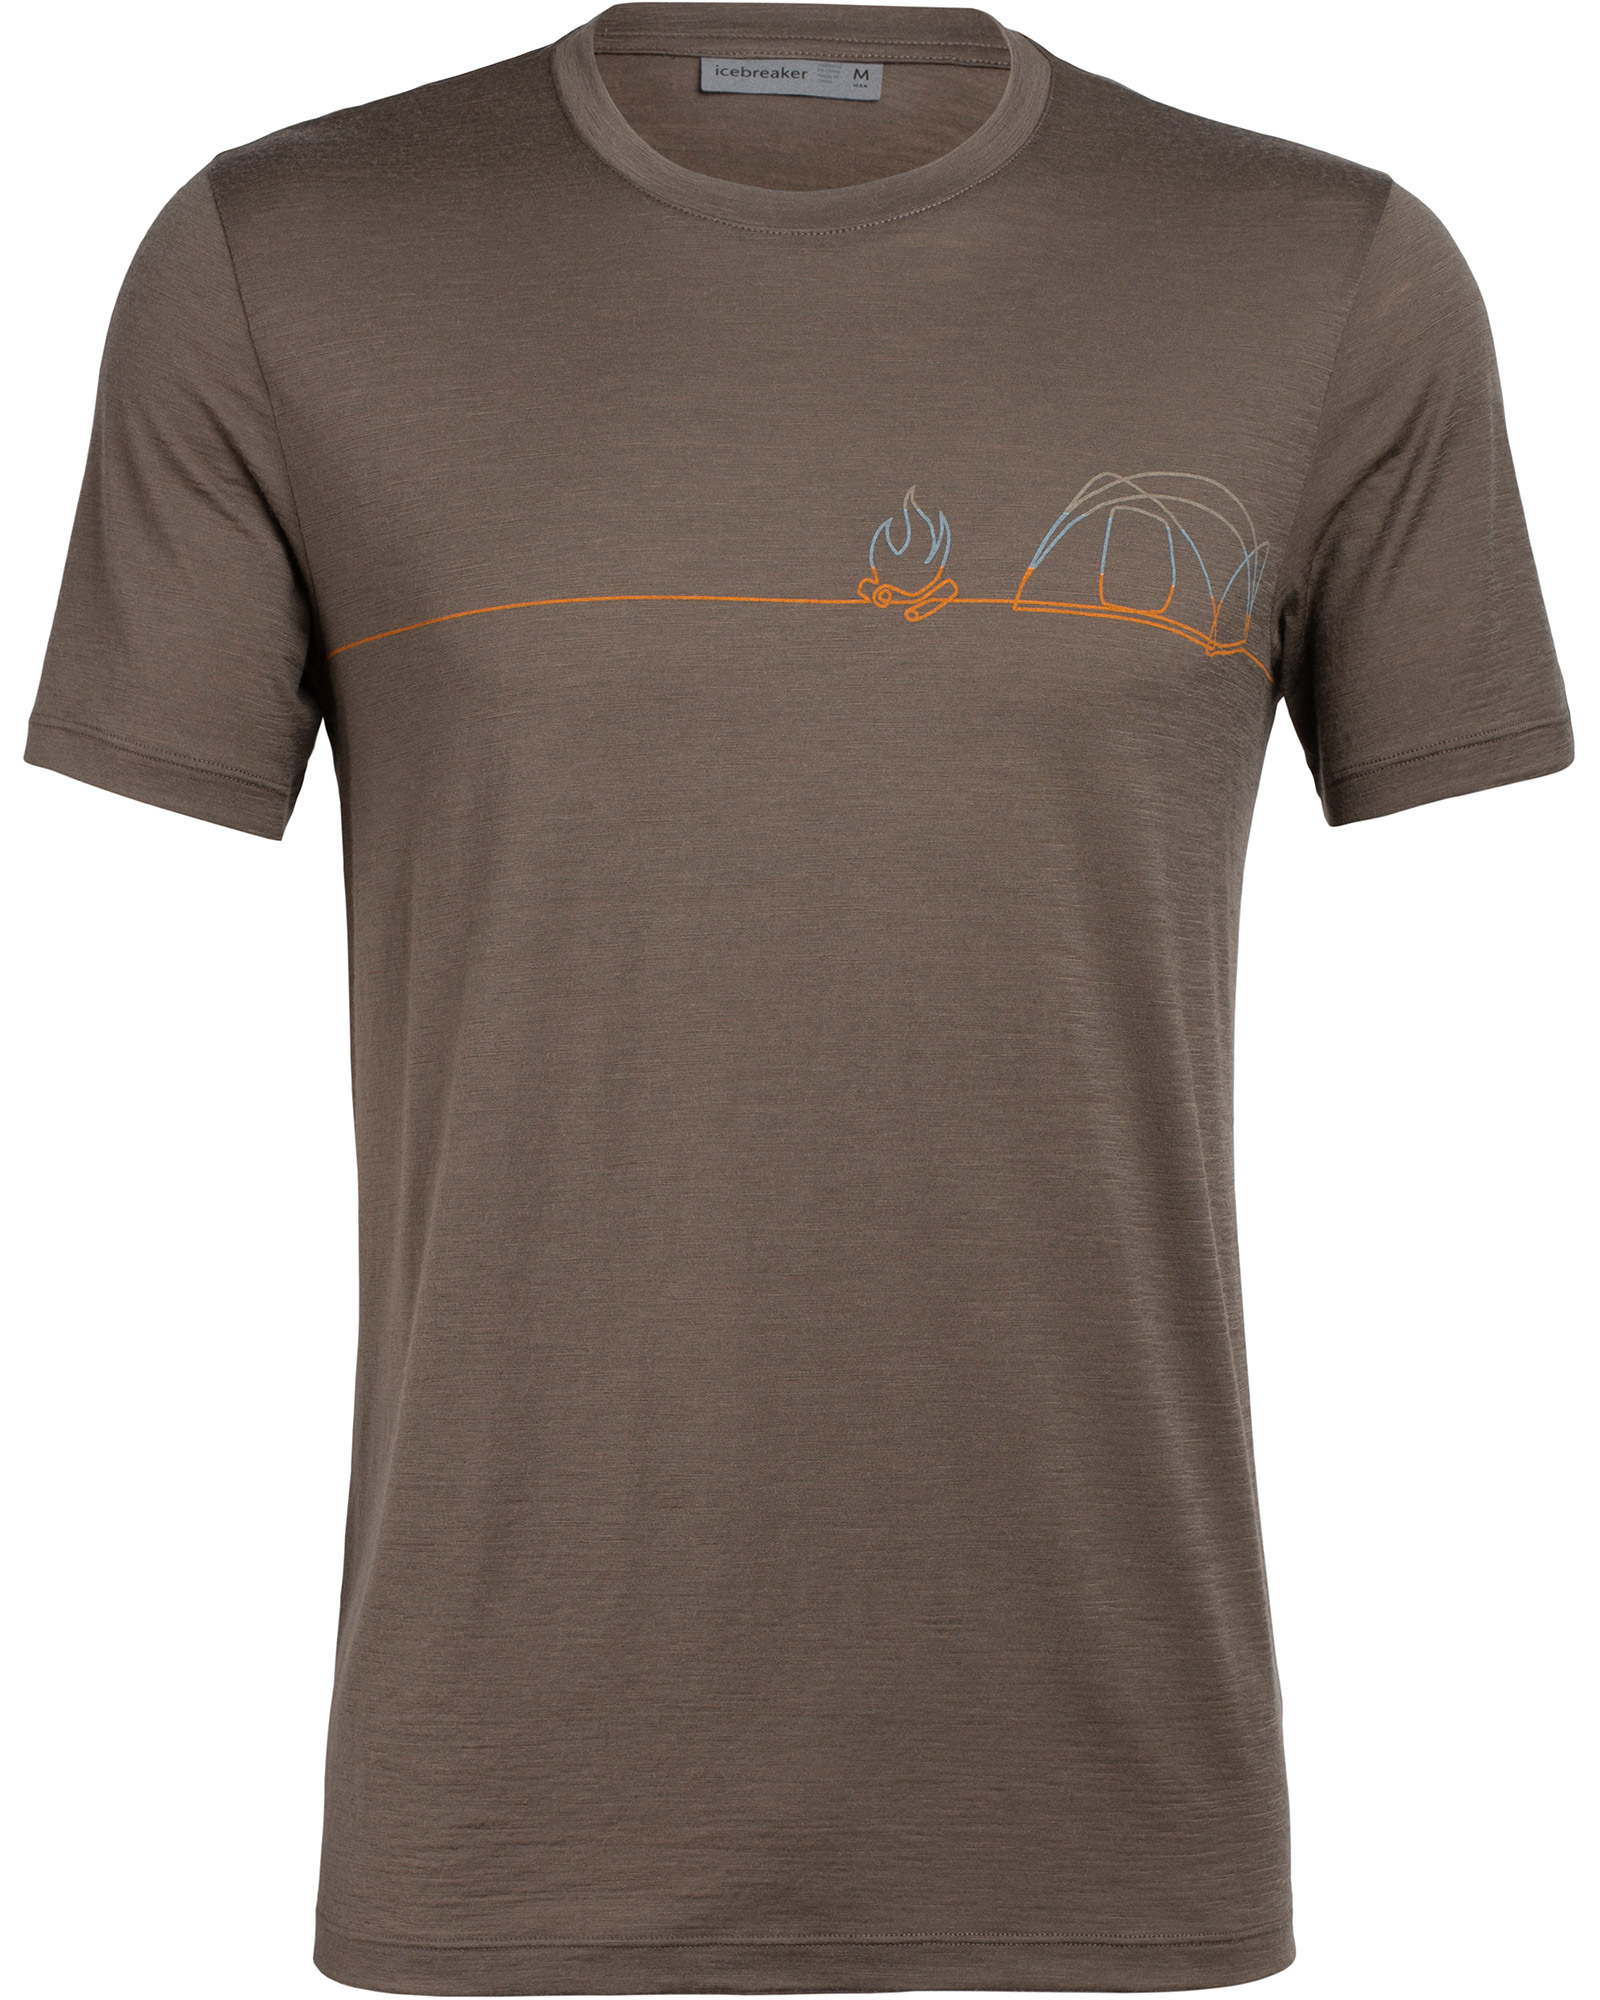 icebreaker Merino Tech Lite Graphic Men’s Crew T Shirt - Single Line Camp/Driftwood XL